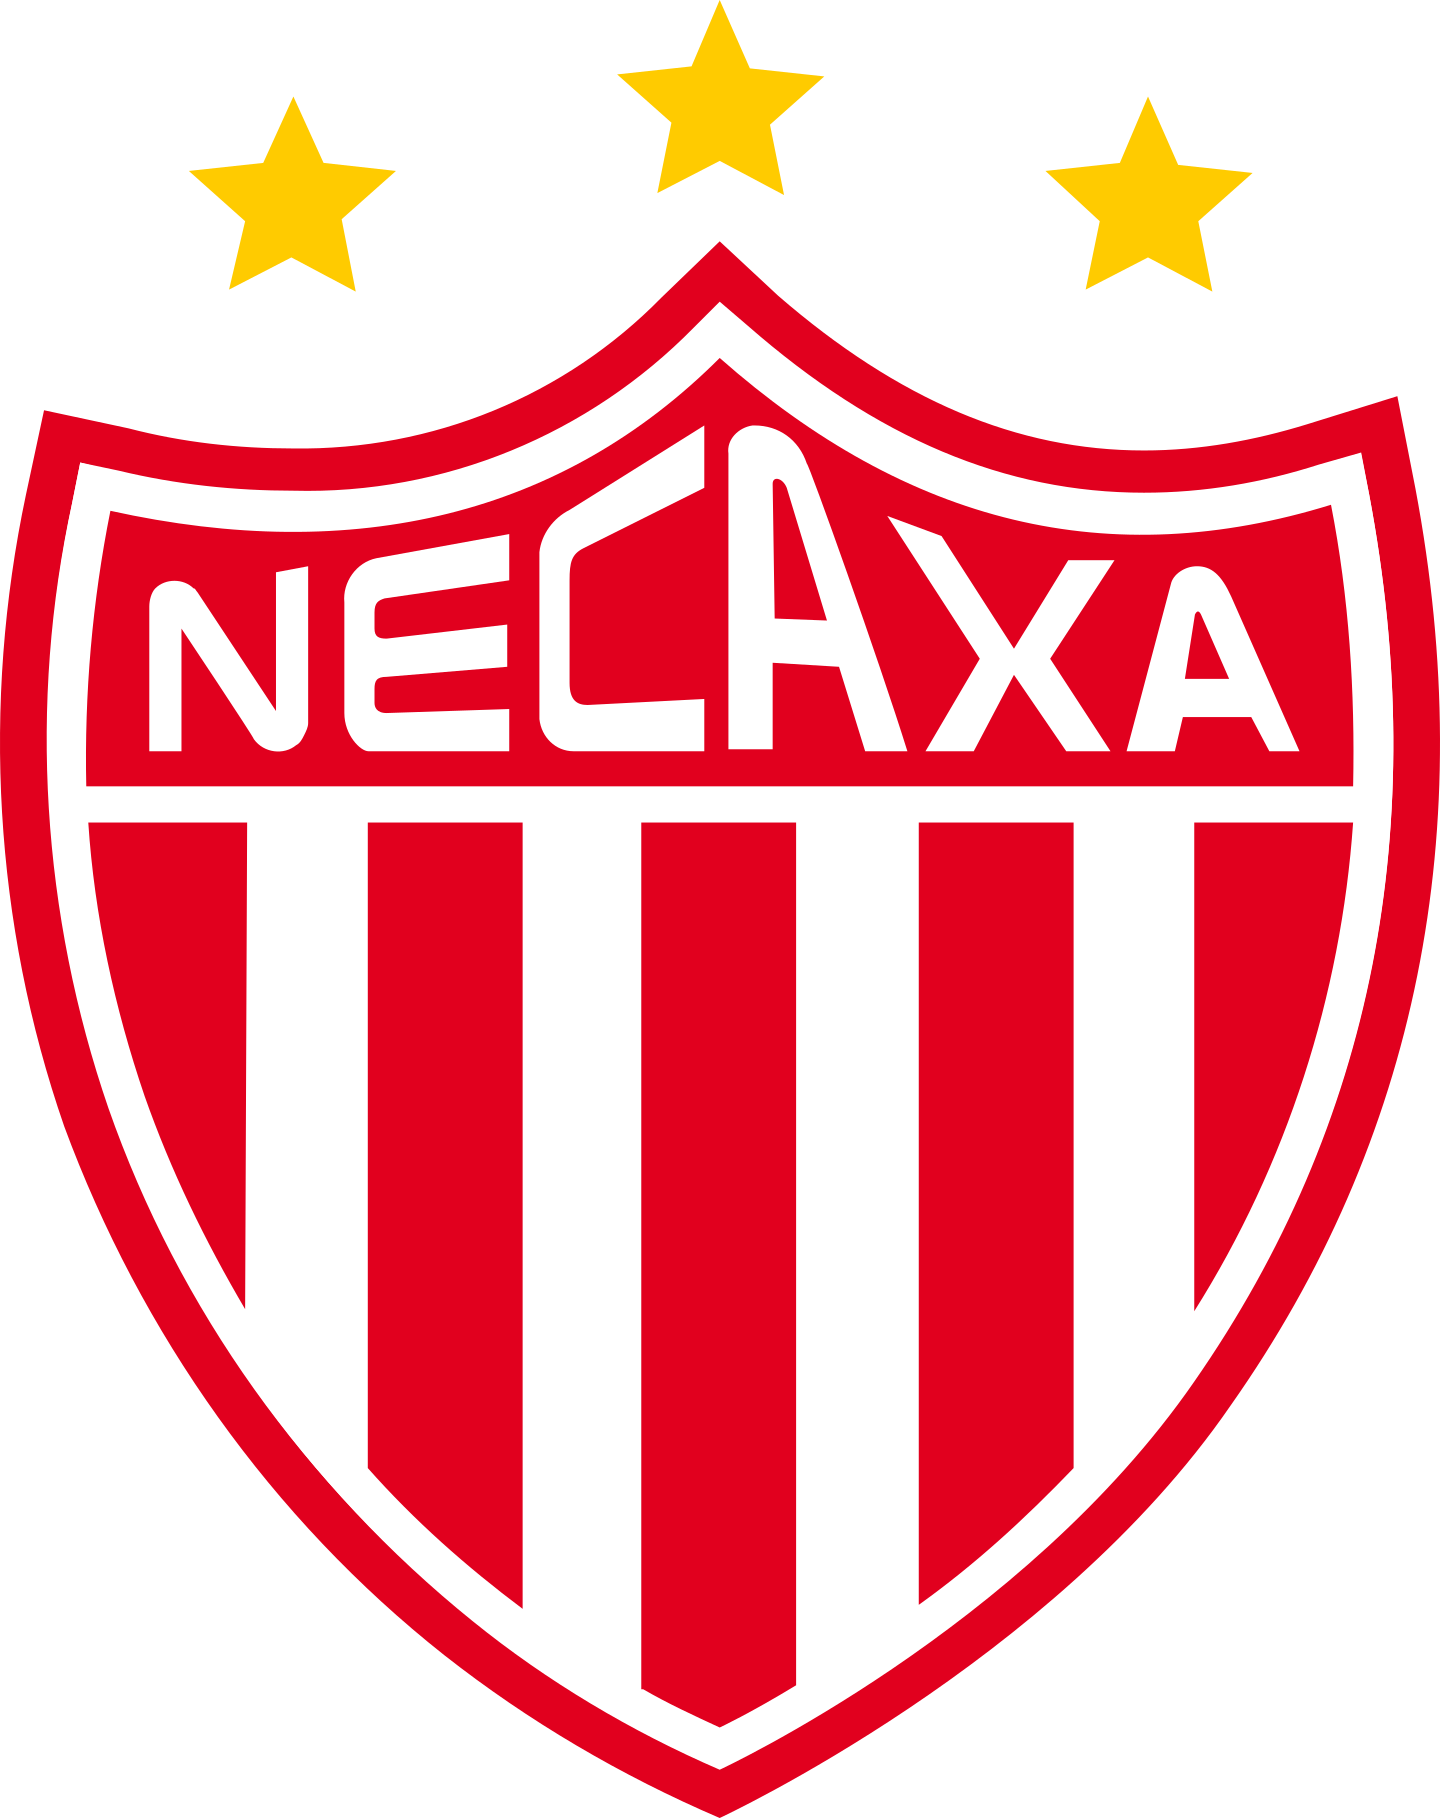 club necaxa logo 3 - Club Necaxa Logo